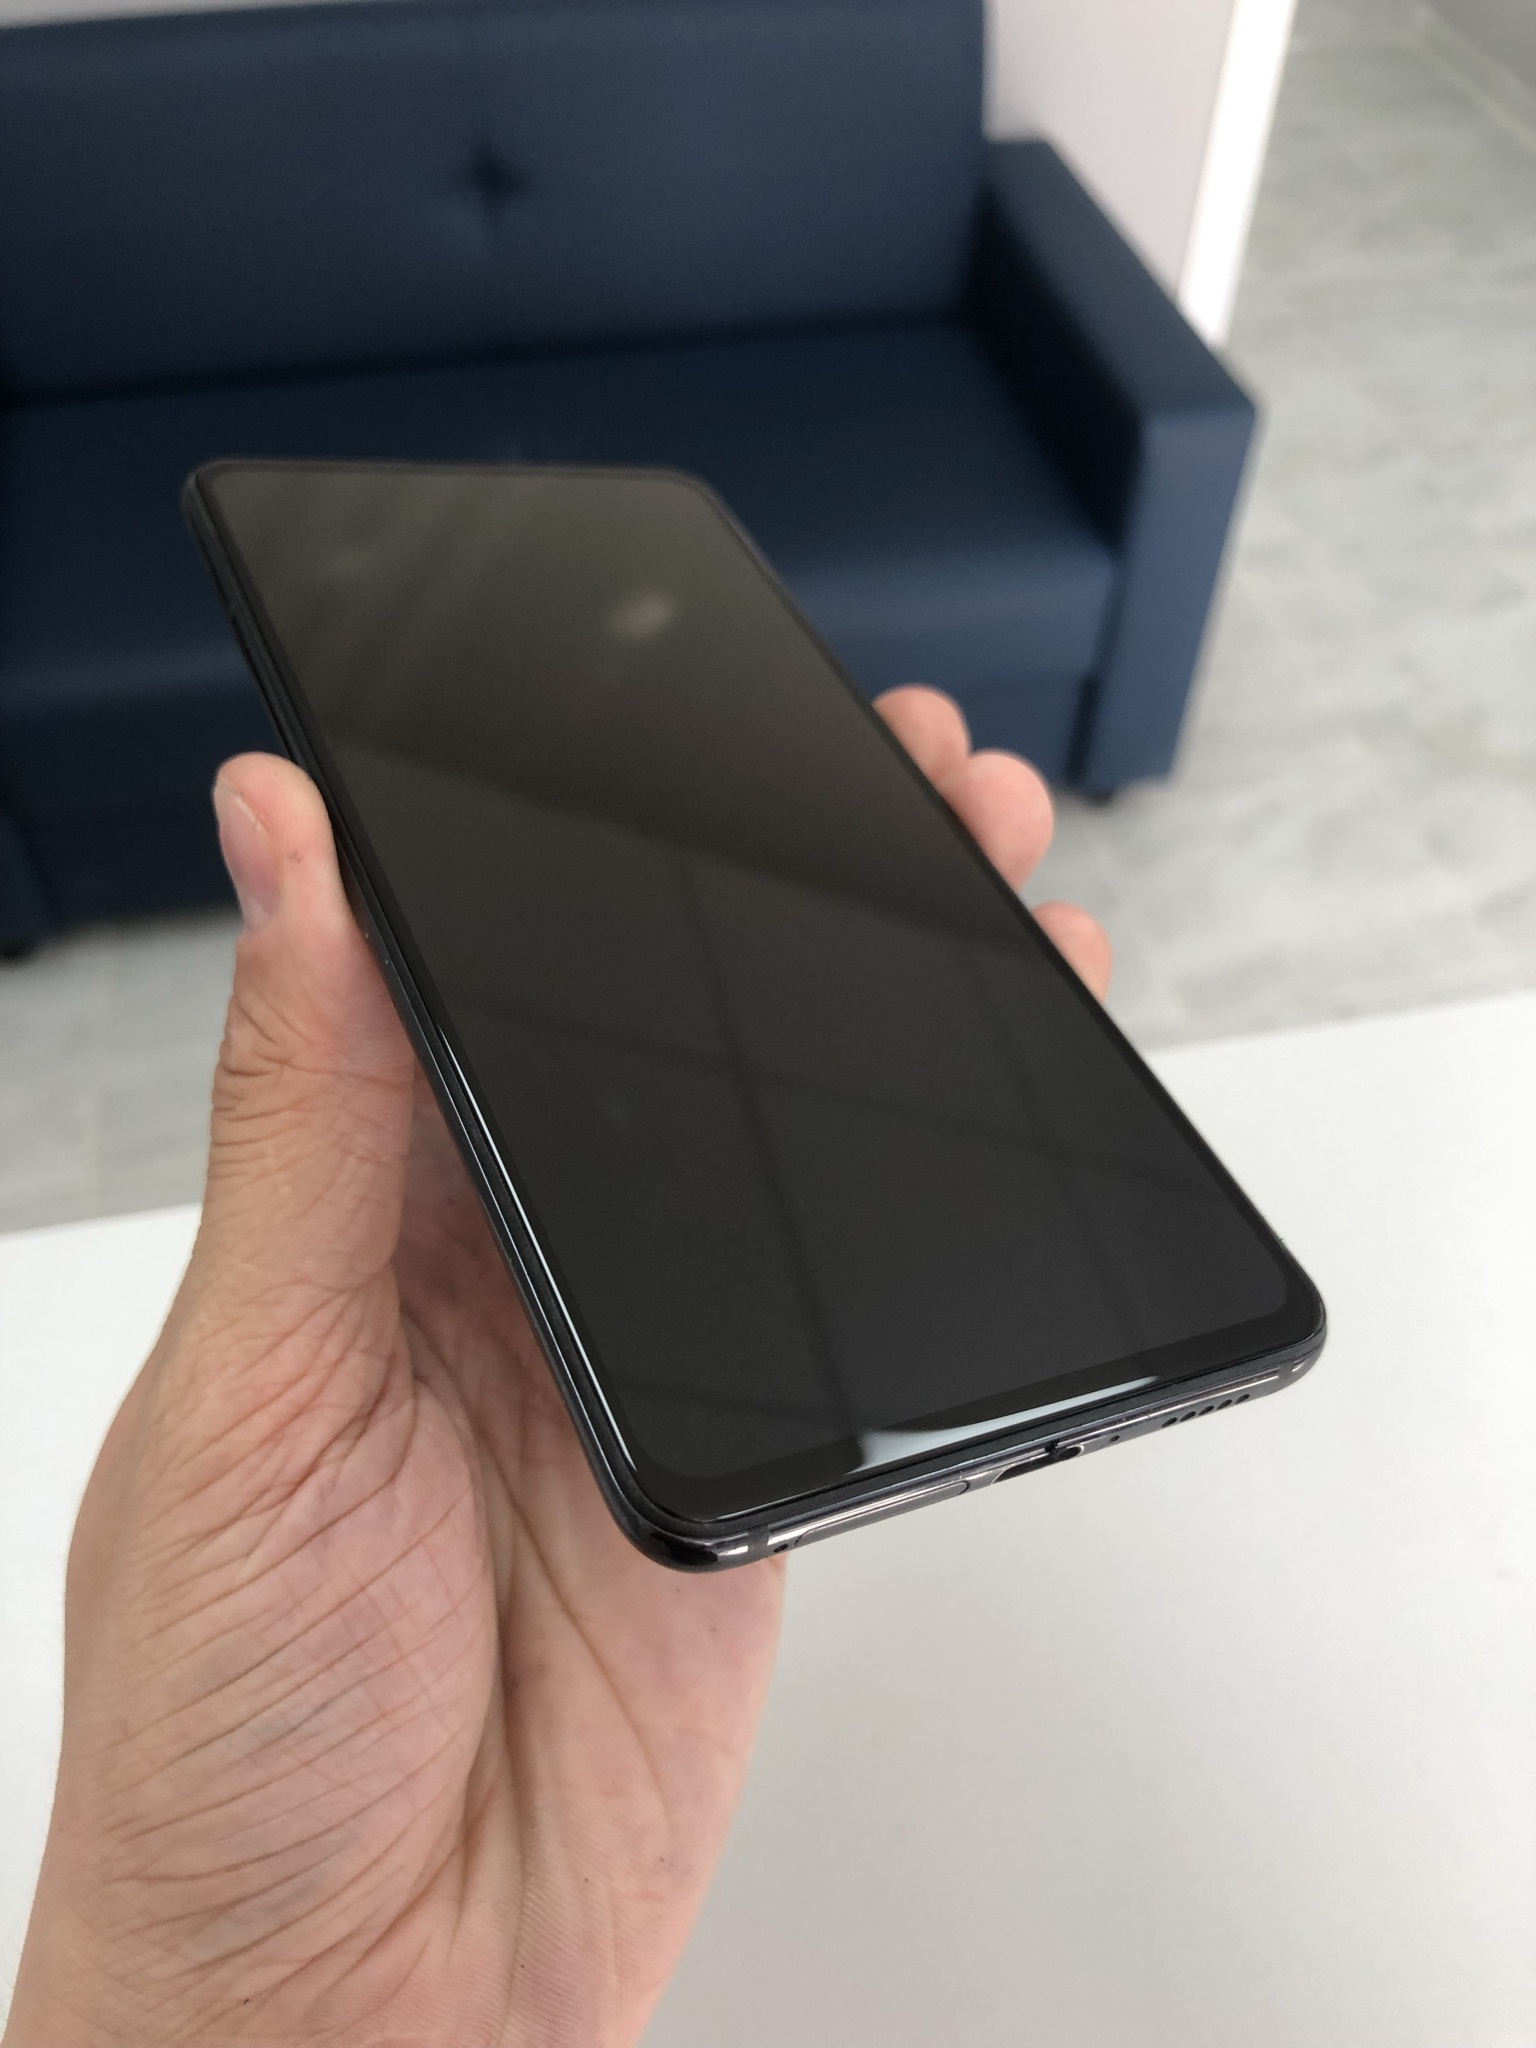 Xiaomi Mi 9t glass replacement. - My, Rukozhop, Ремонт телефона, Mobile phones, Xiaomi, Xiaomi Mi9, Glass replacement, Breaking, Telephone, Longpost